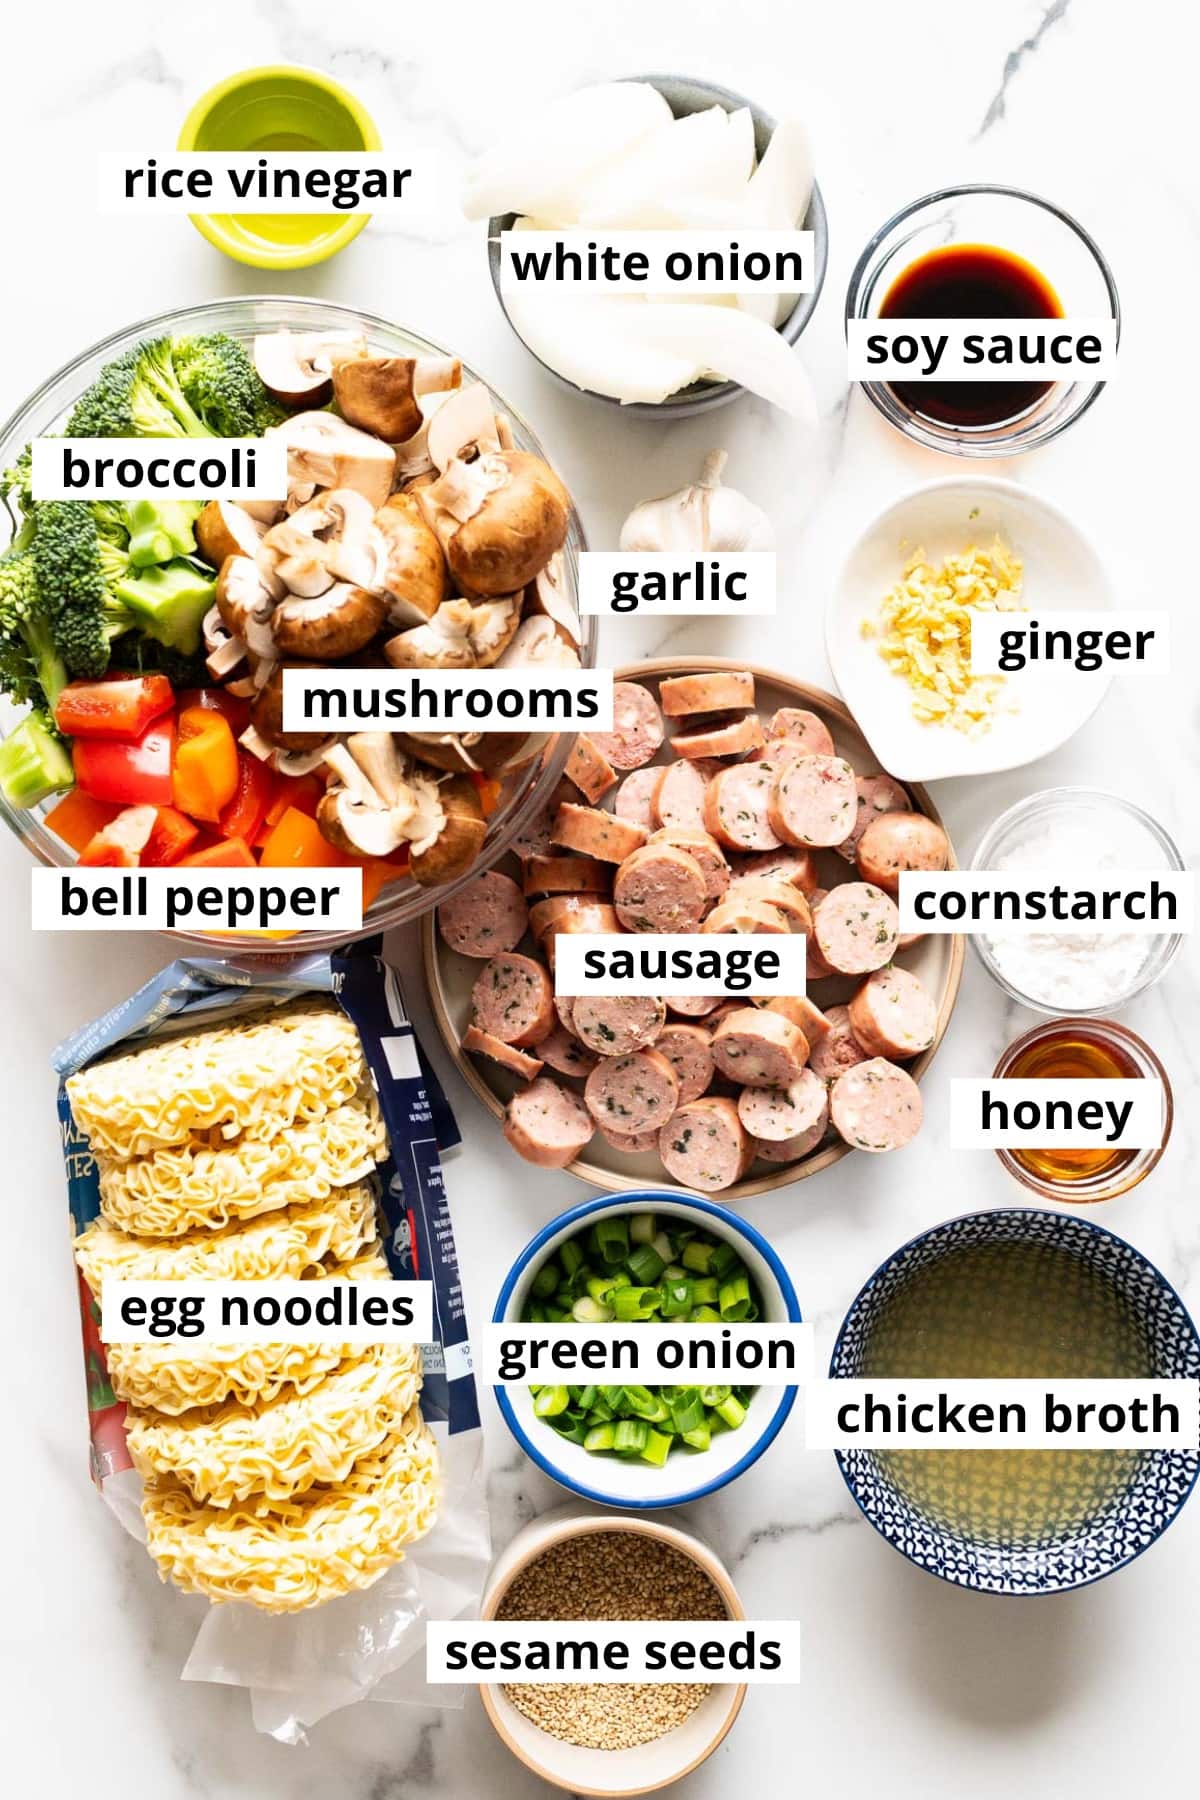 Sausage, broccoli, bell pepper, mushrooms, garlic, ginger, onion, soy sauce, rice vinegar, cornstarch, honey, egg noodles, green onion, chicken broth, sesame seeds.